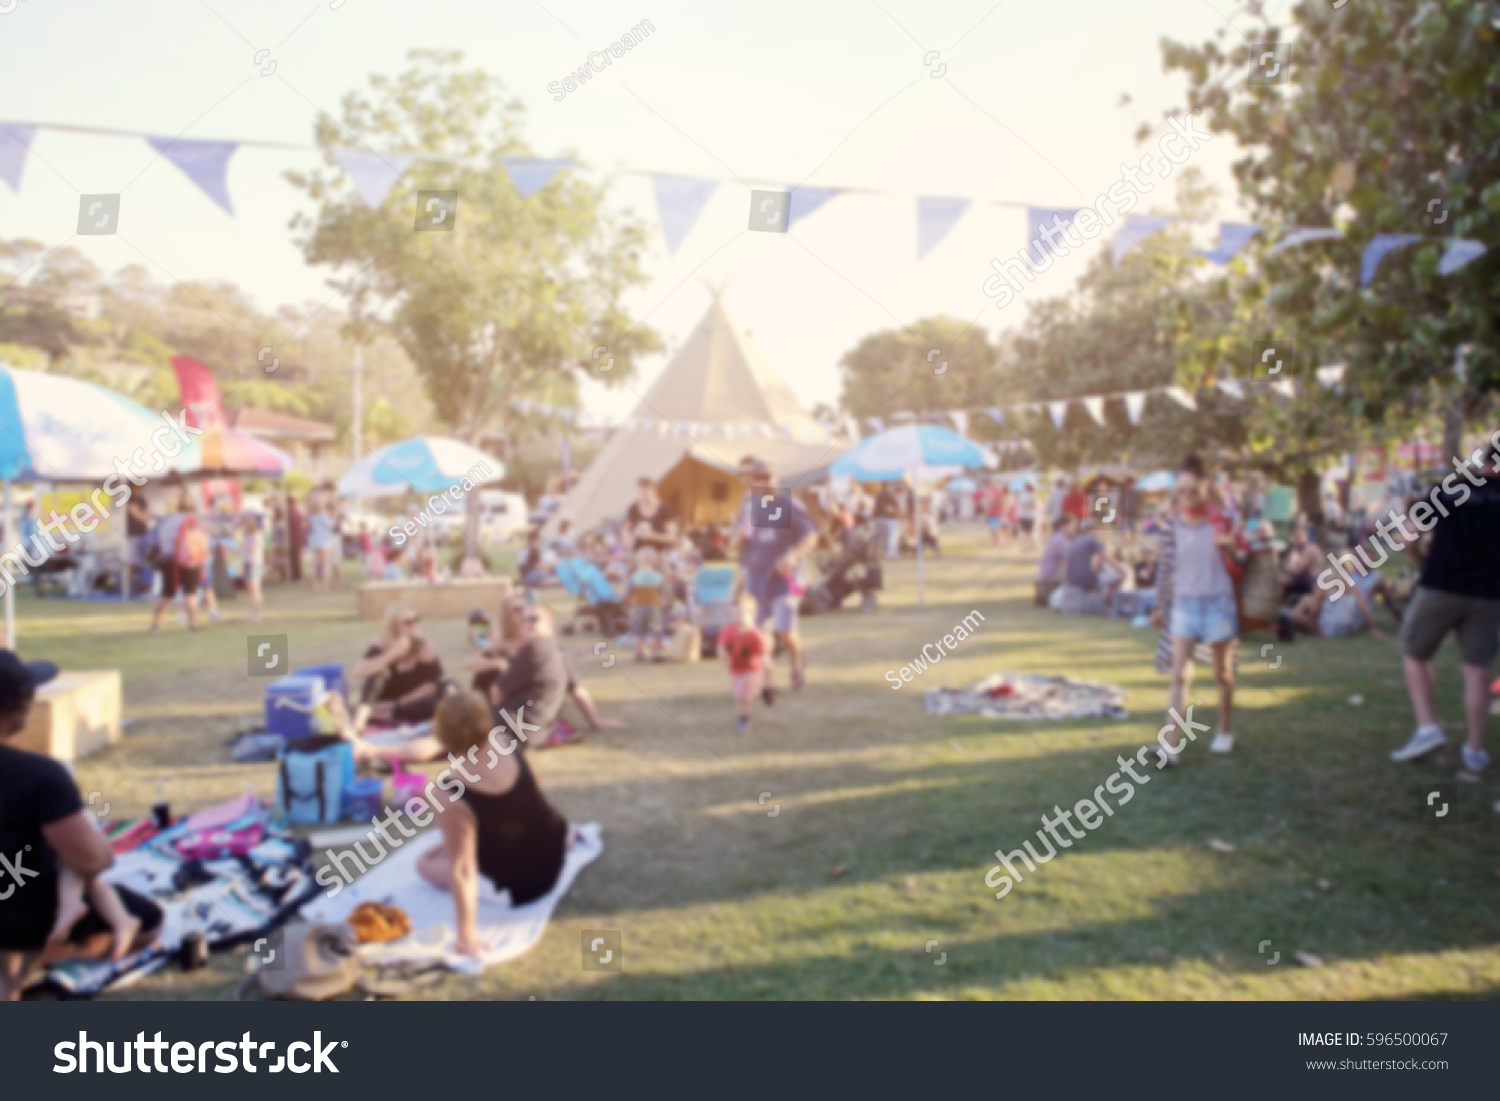 Blur defocused background of people, family in park fair, festive summer, music festival tent #596500067